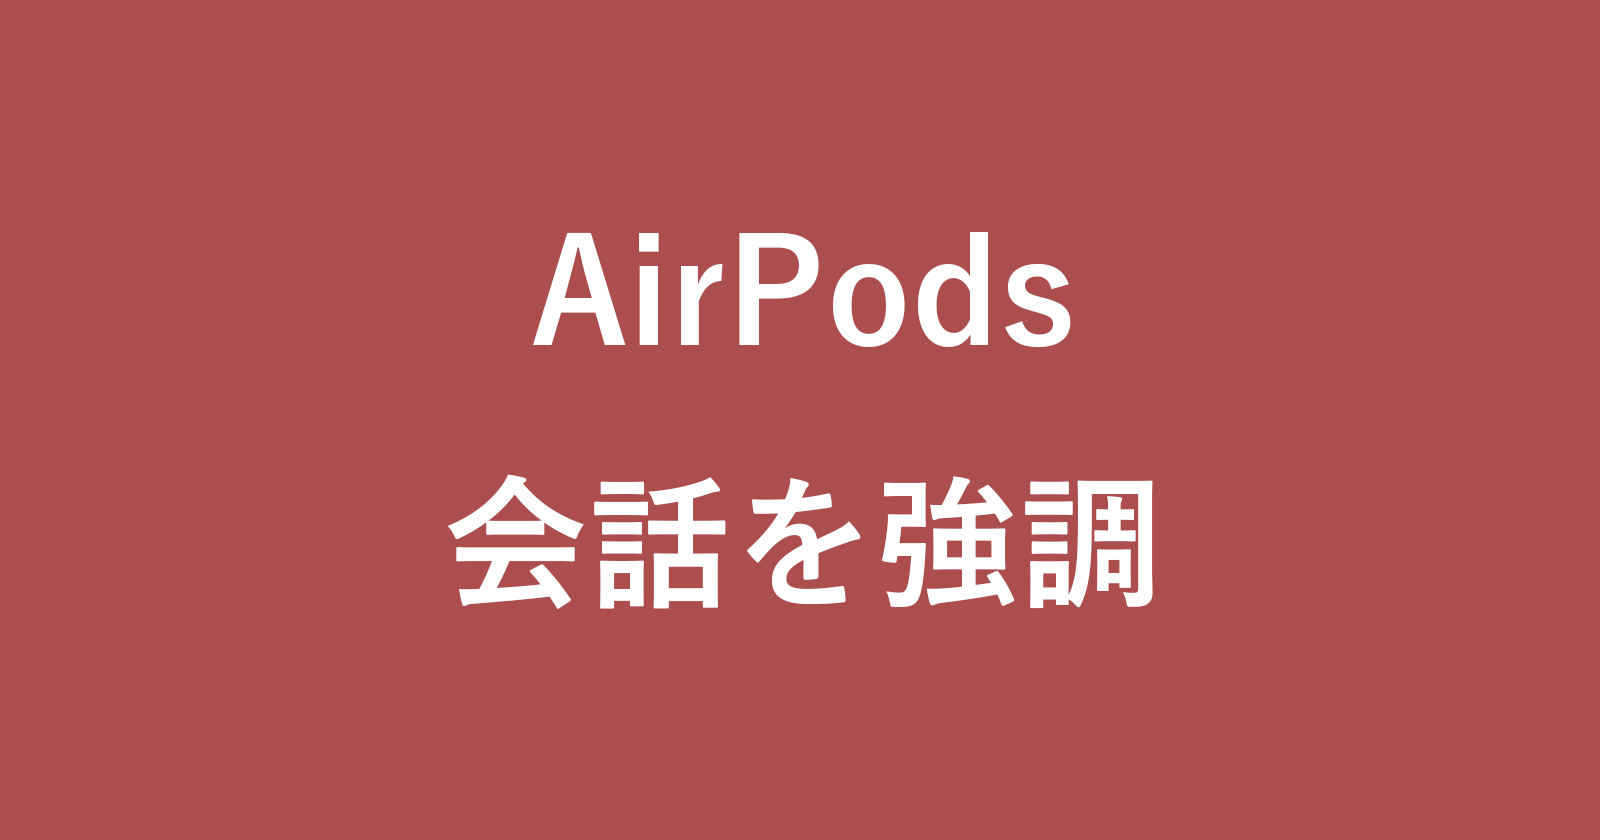 airpods conversation boost